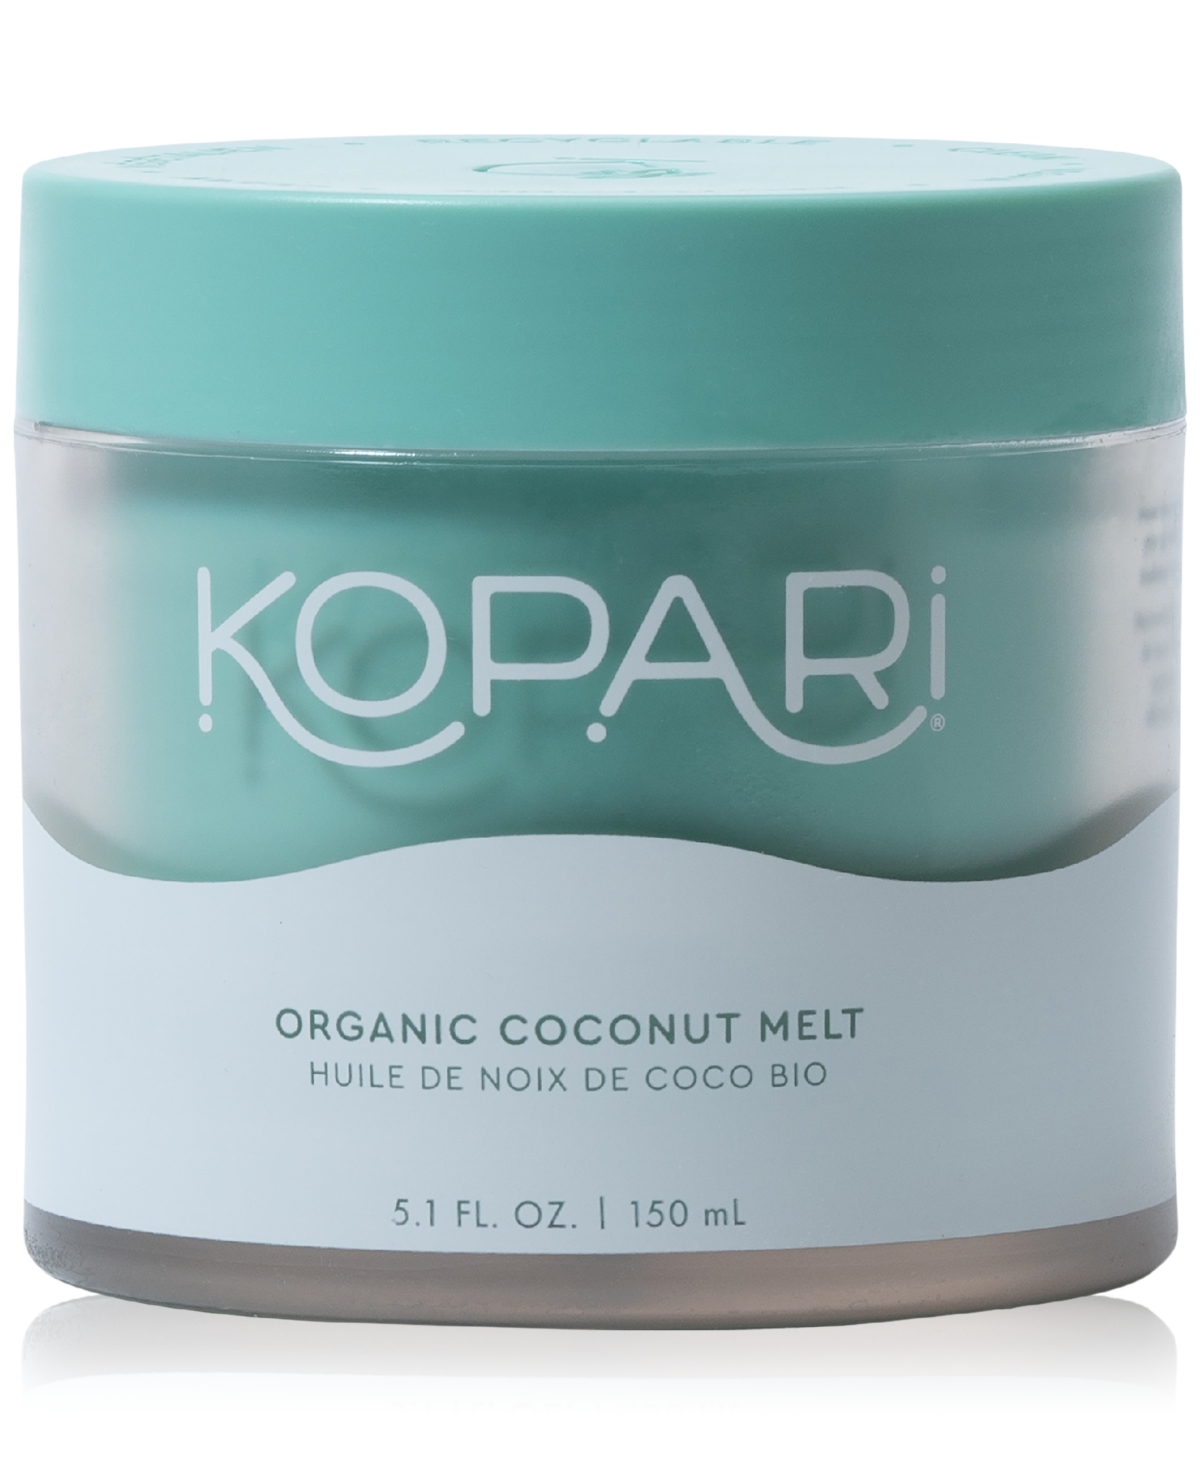 Kopari Beauty Organic Coconut Melt